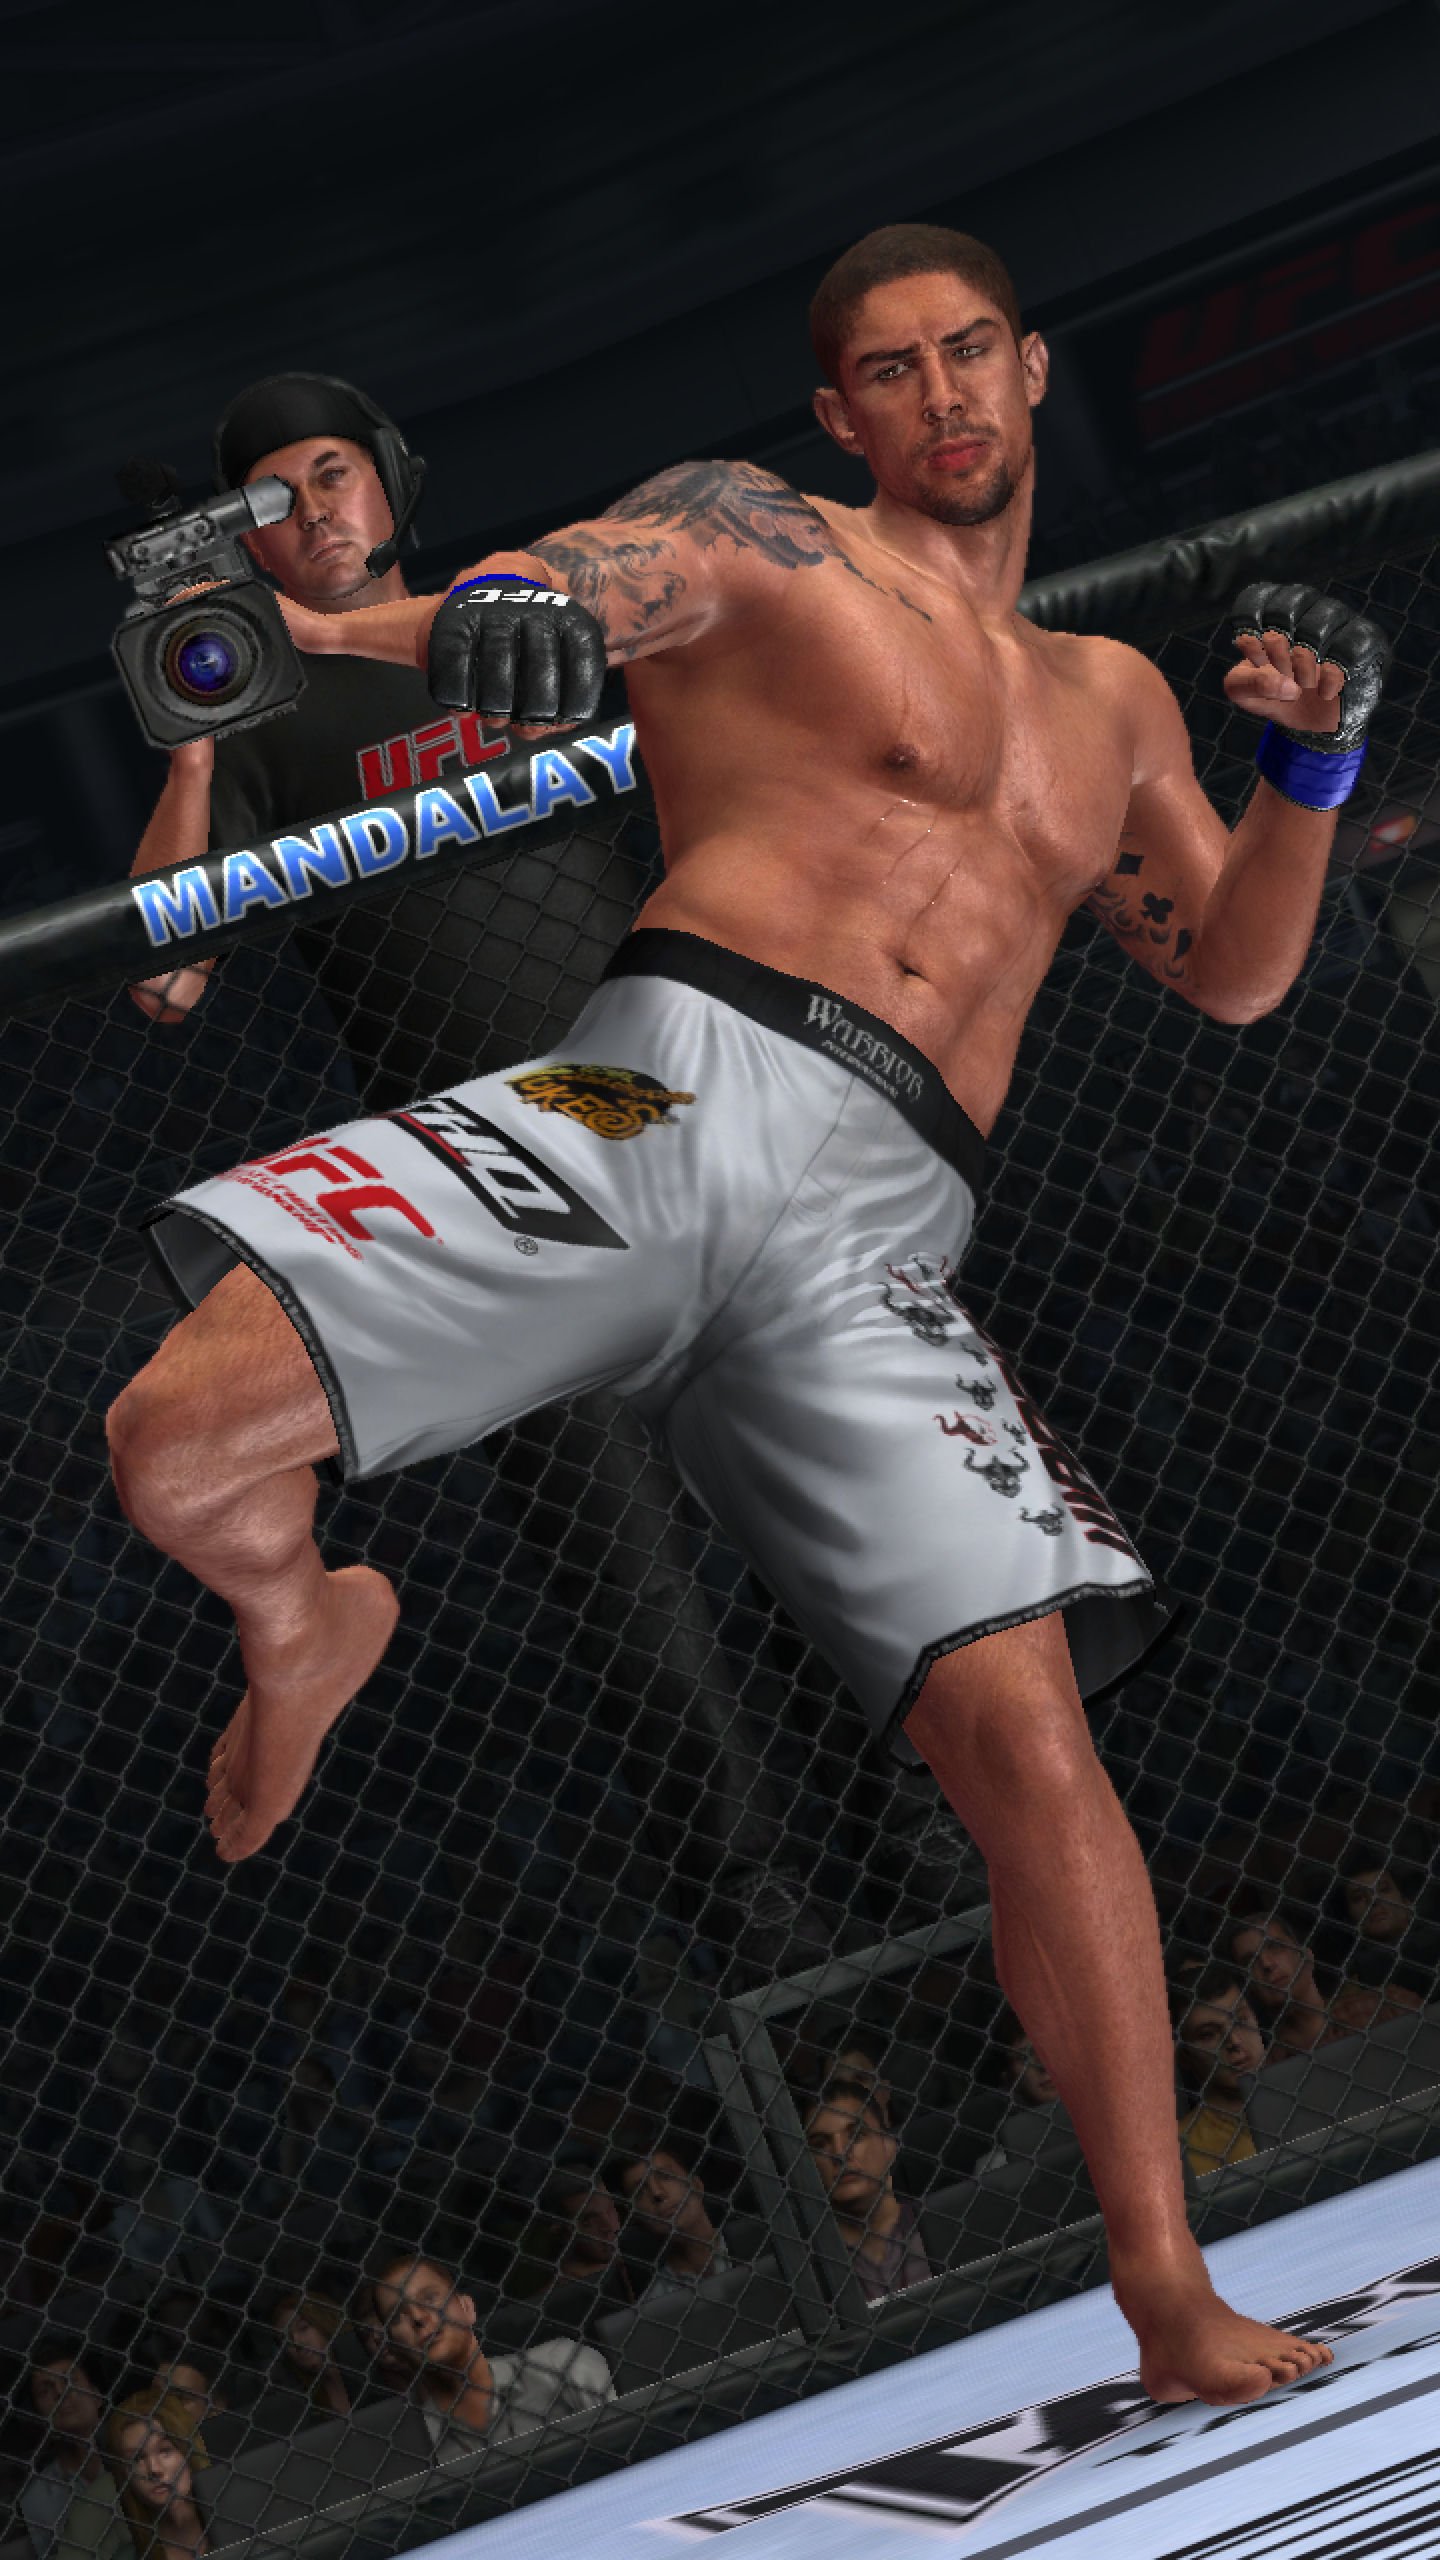 UFC Undisputed 2010 - Playstation 3